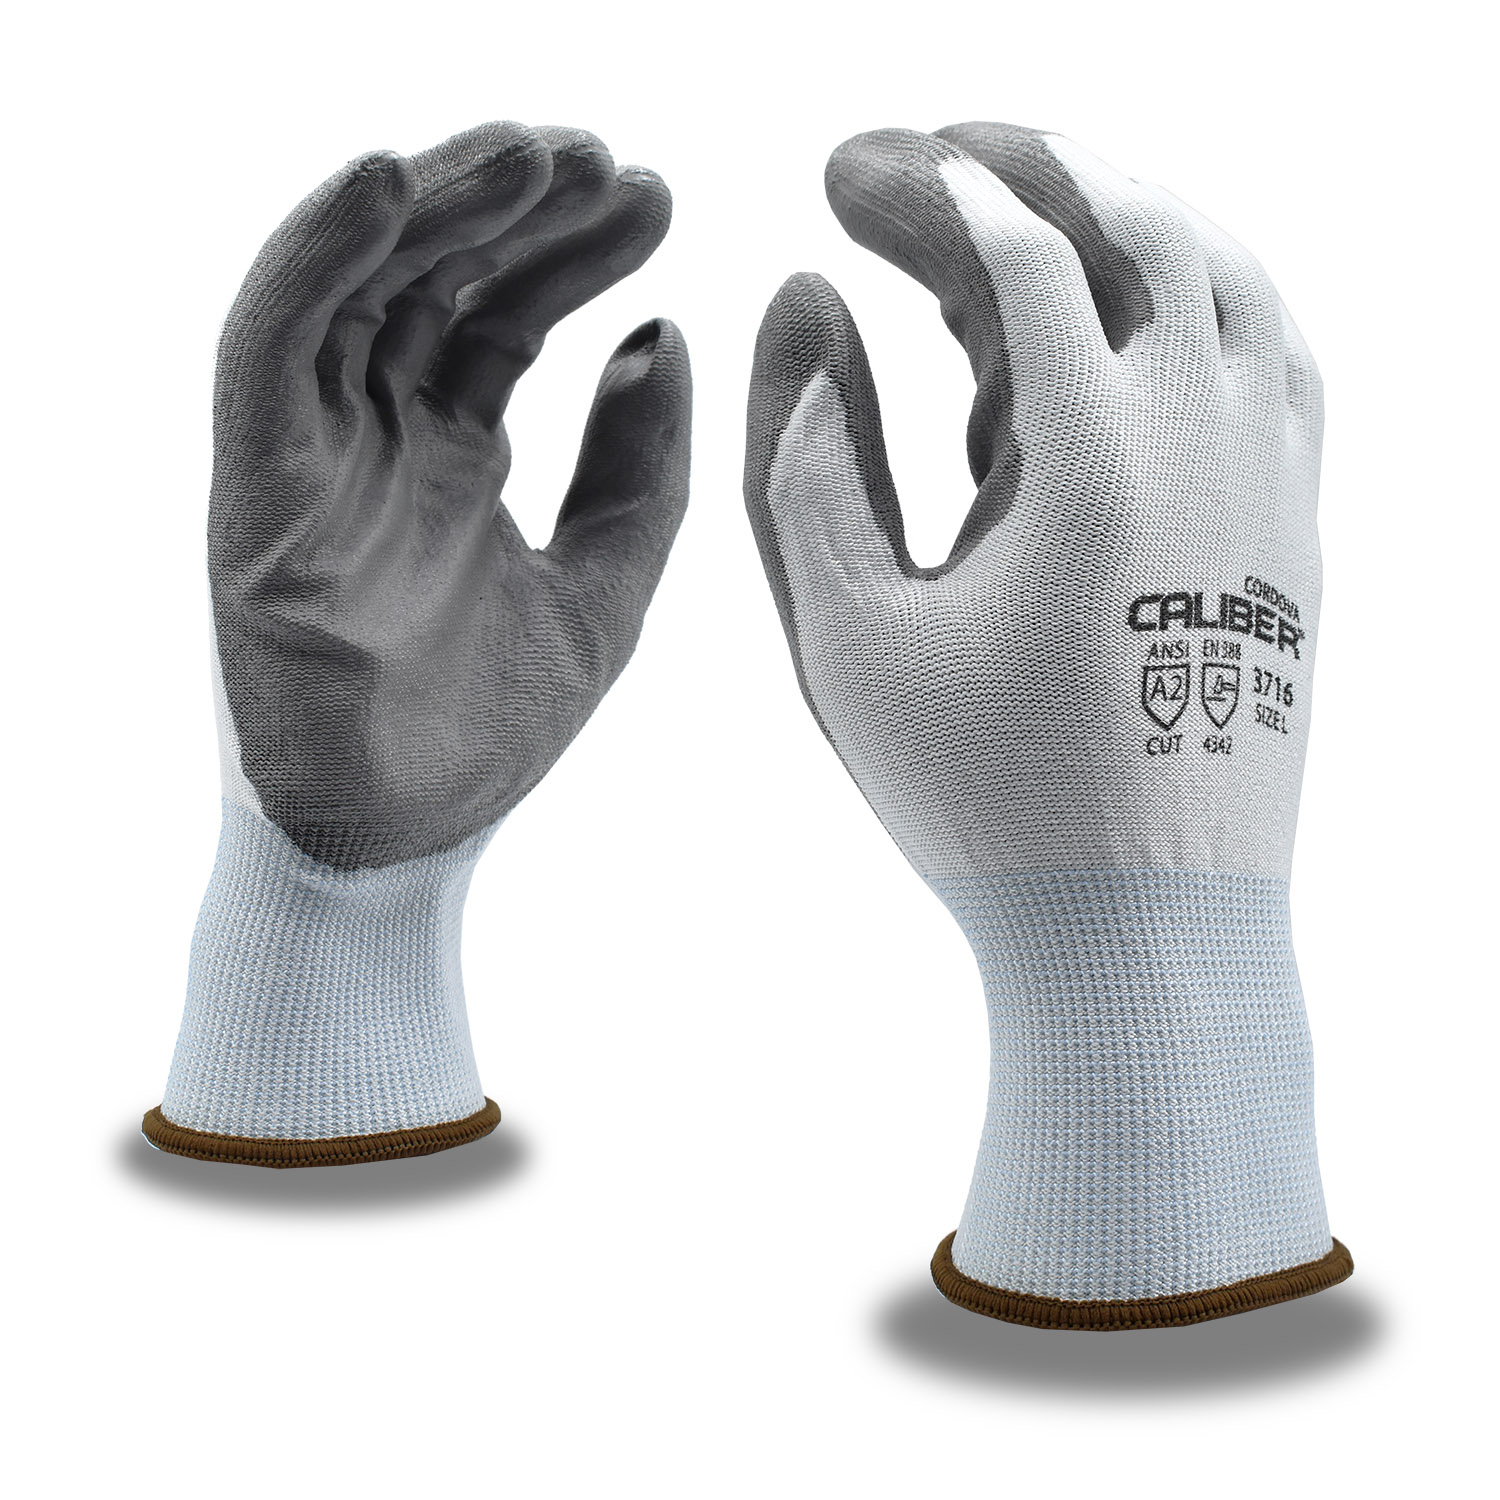 CALIBER HPPE GRAY PU PALM COAT - Cut Resistant Gloves